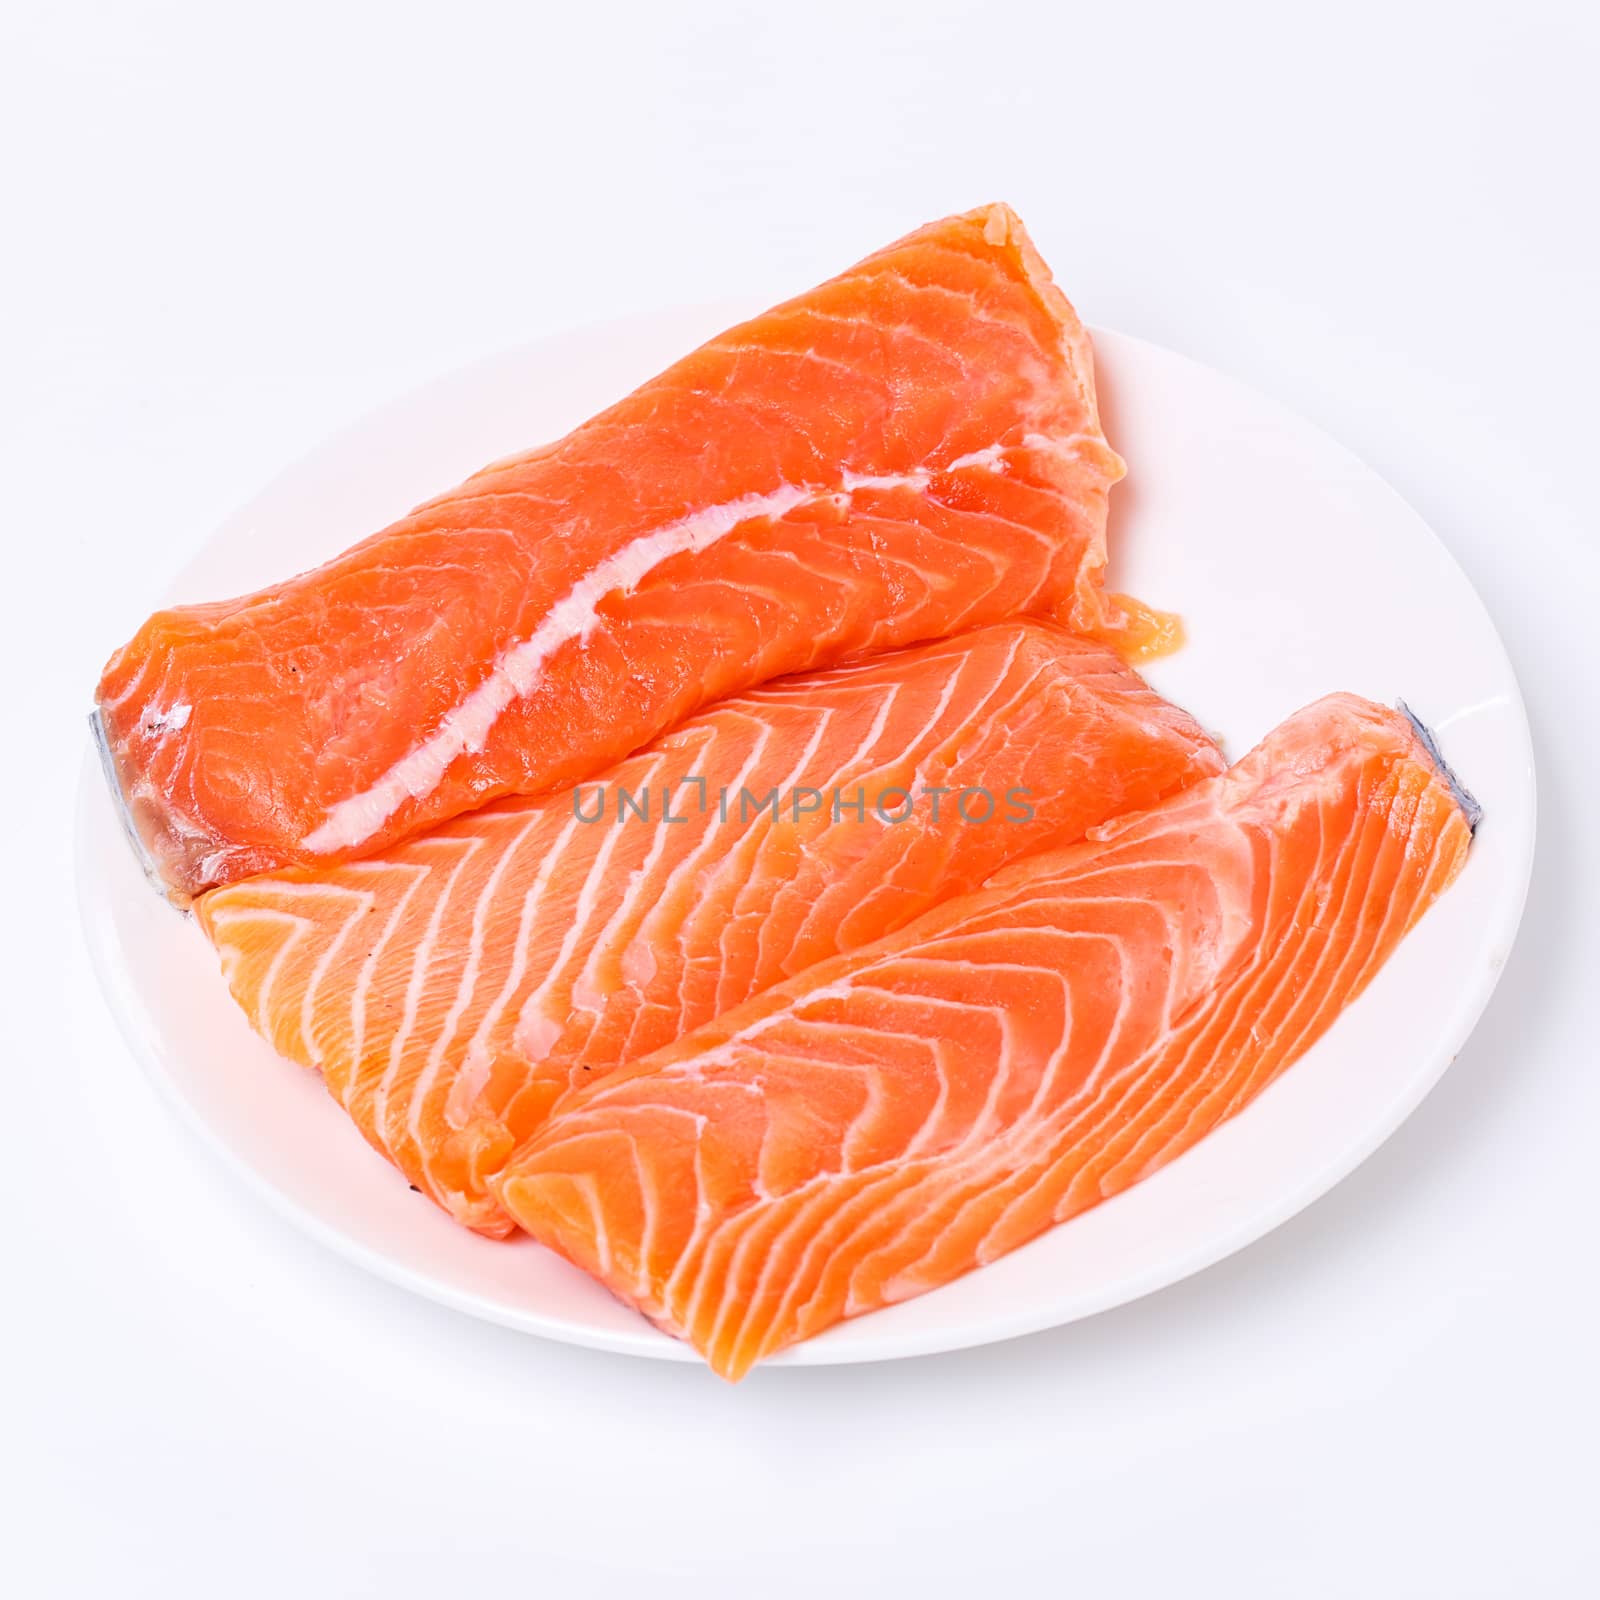 Slice of raw salmon by rufatjumali